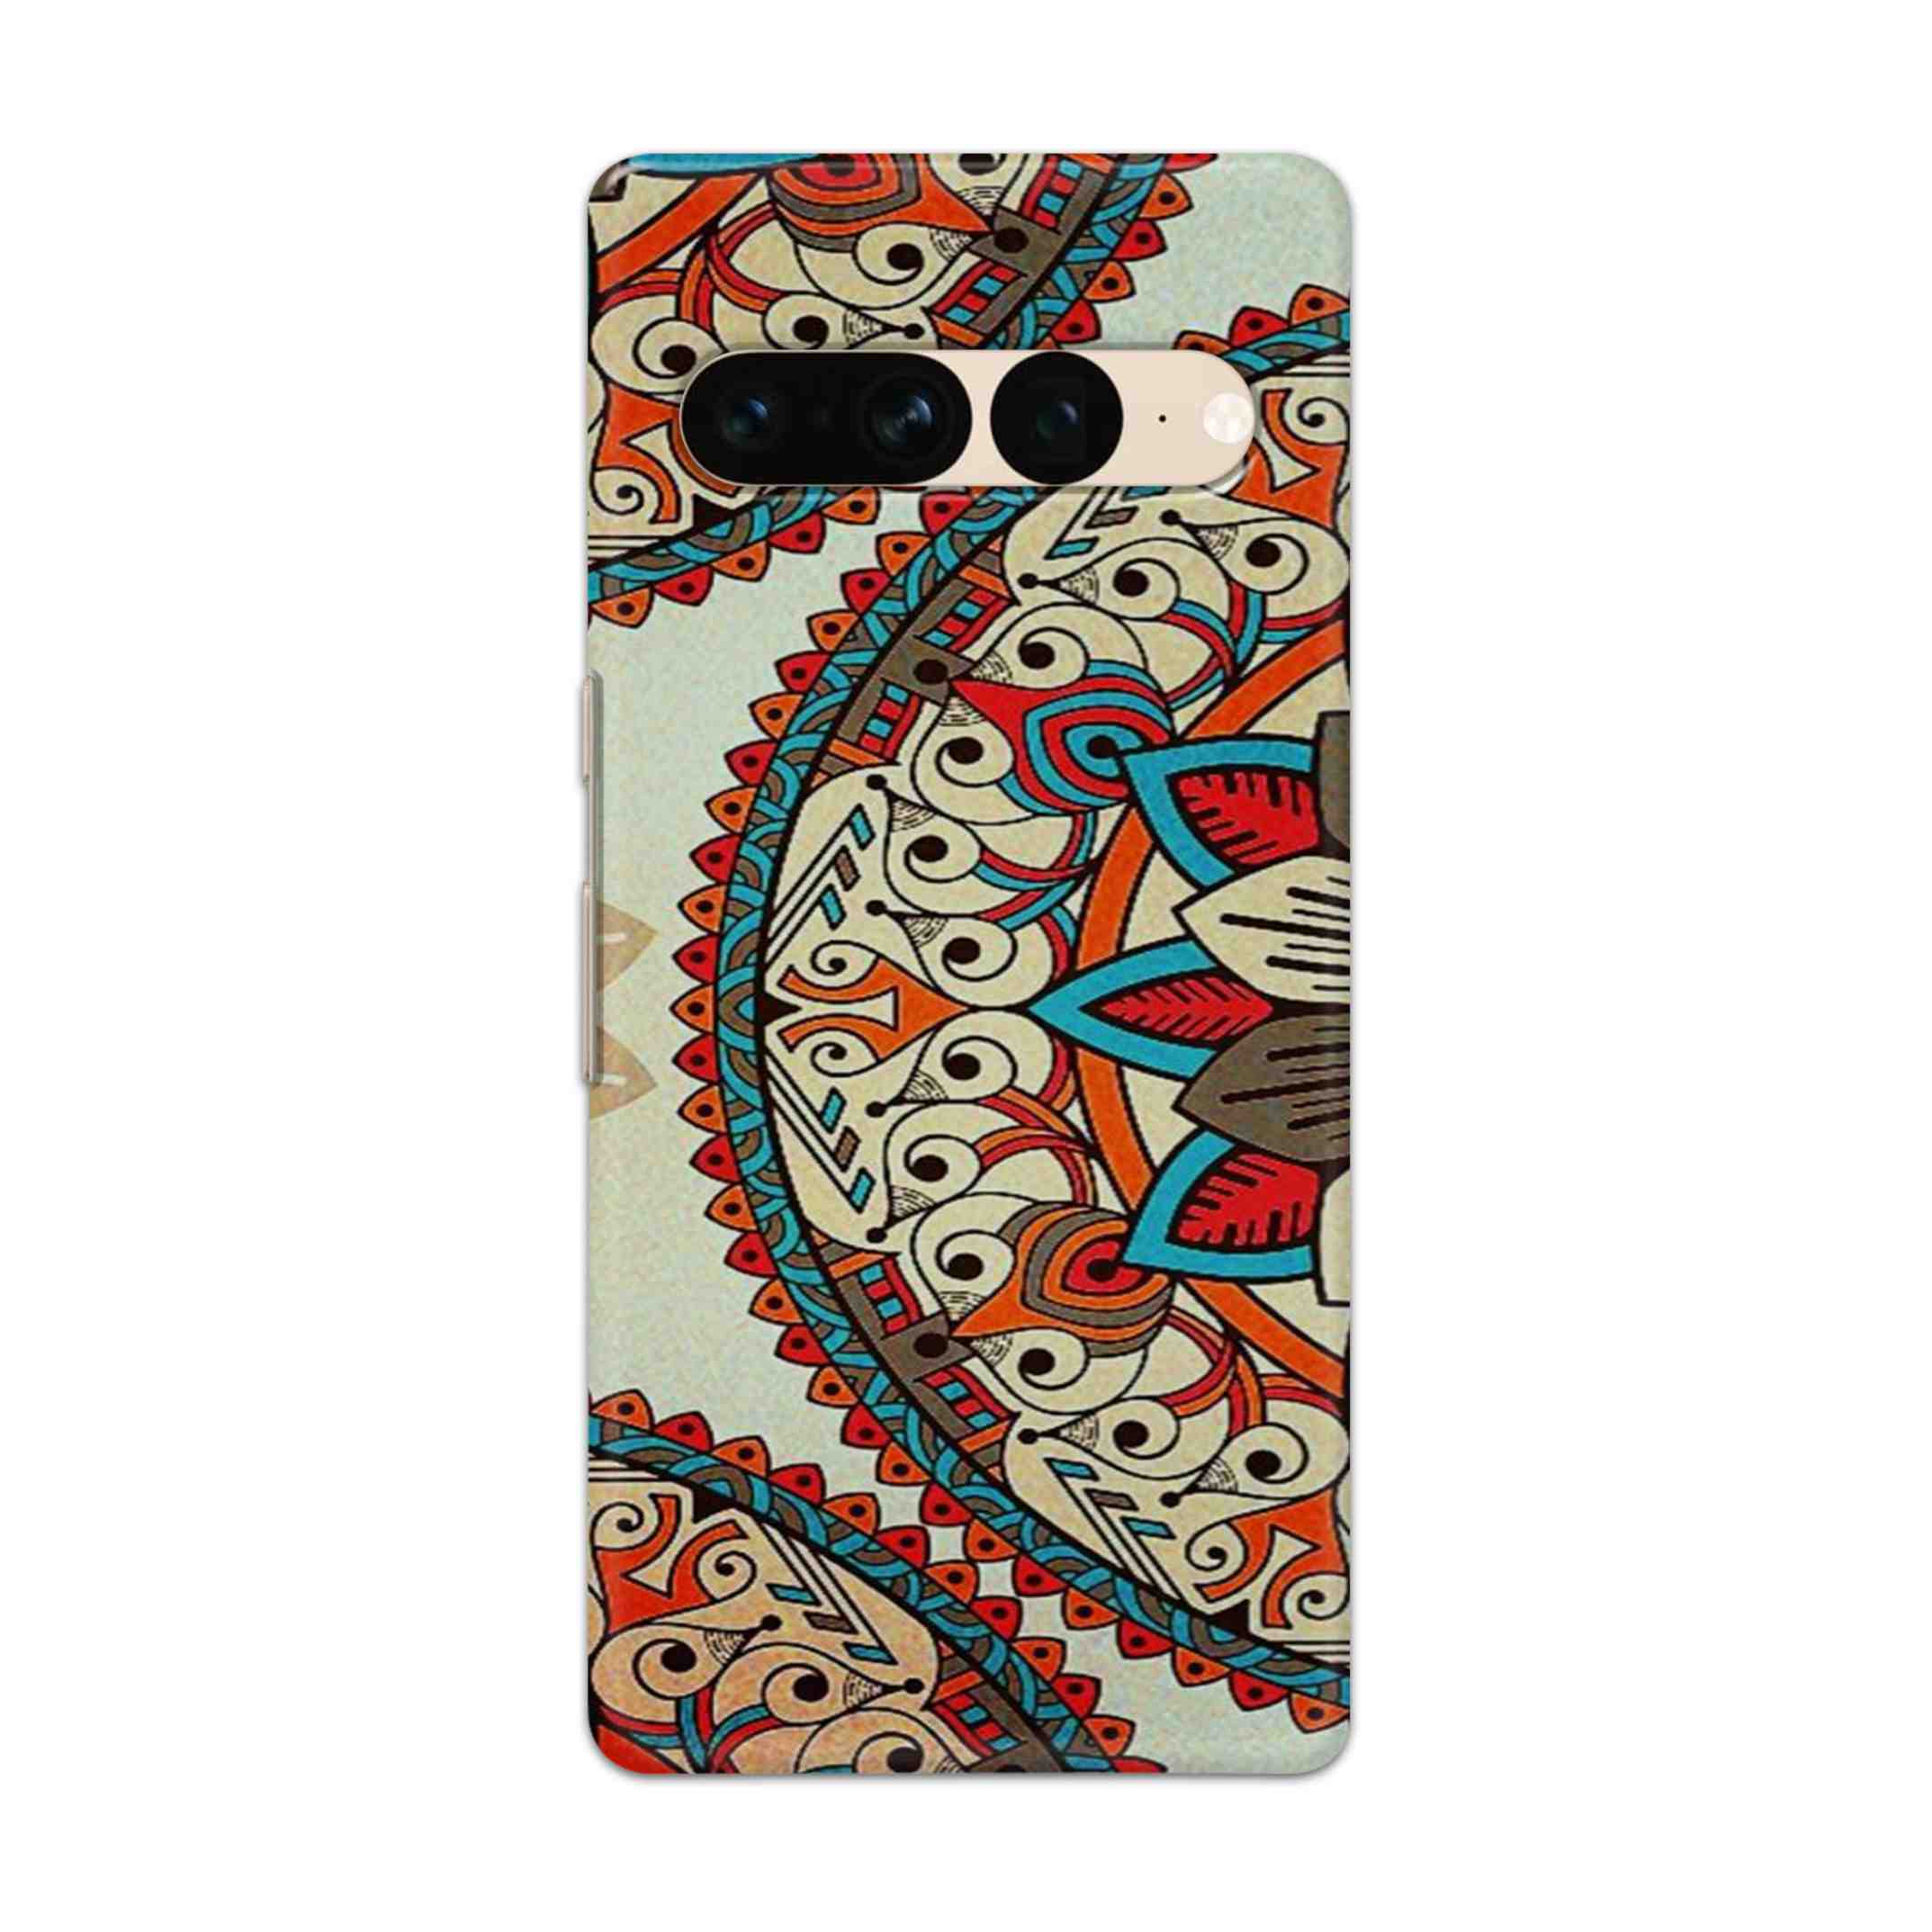 Buy Aztec Mandalas Hard Back Mobile Phone Case Cover For Google Pixel 7 Pro Online